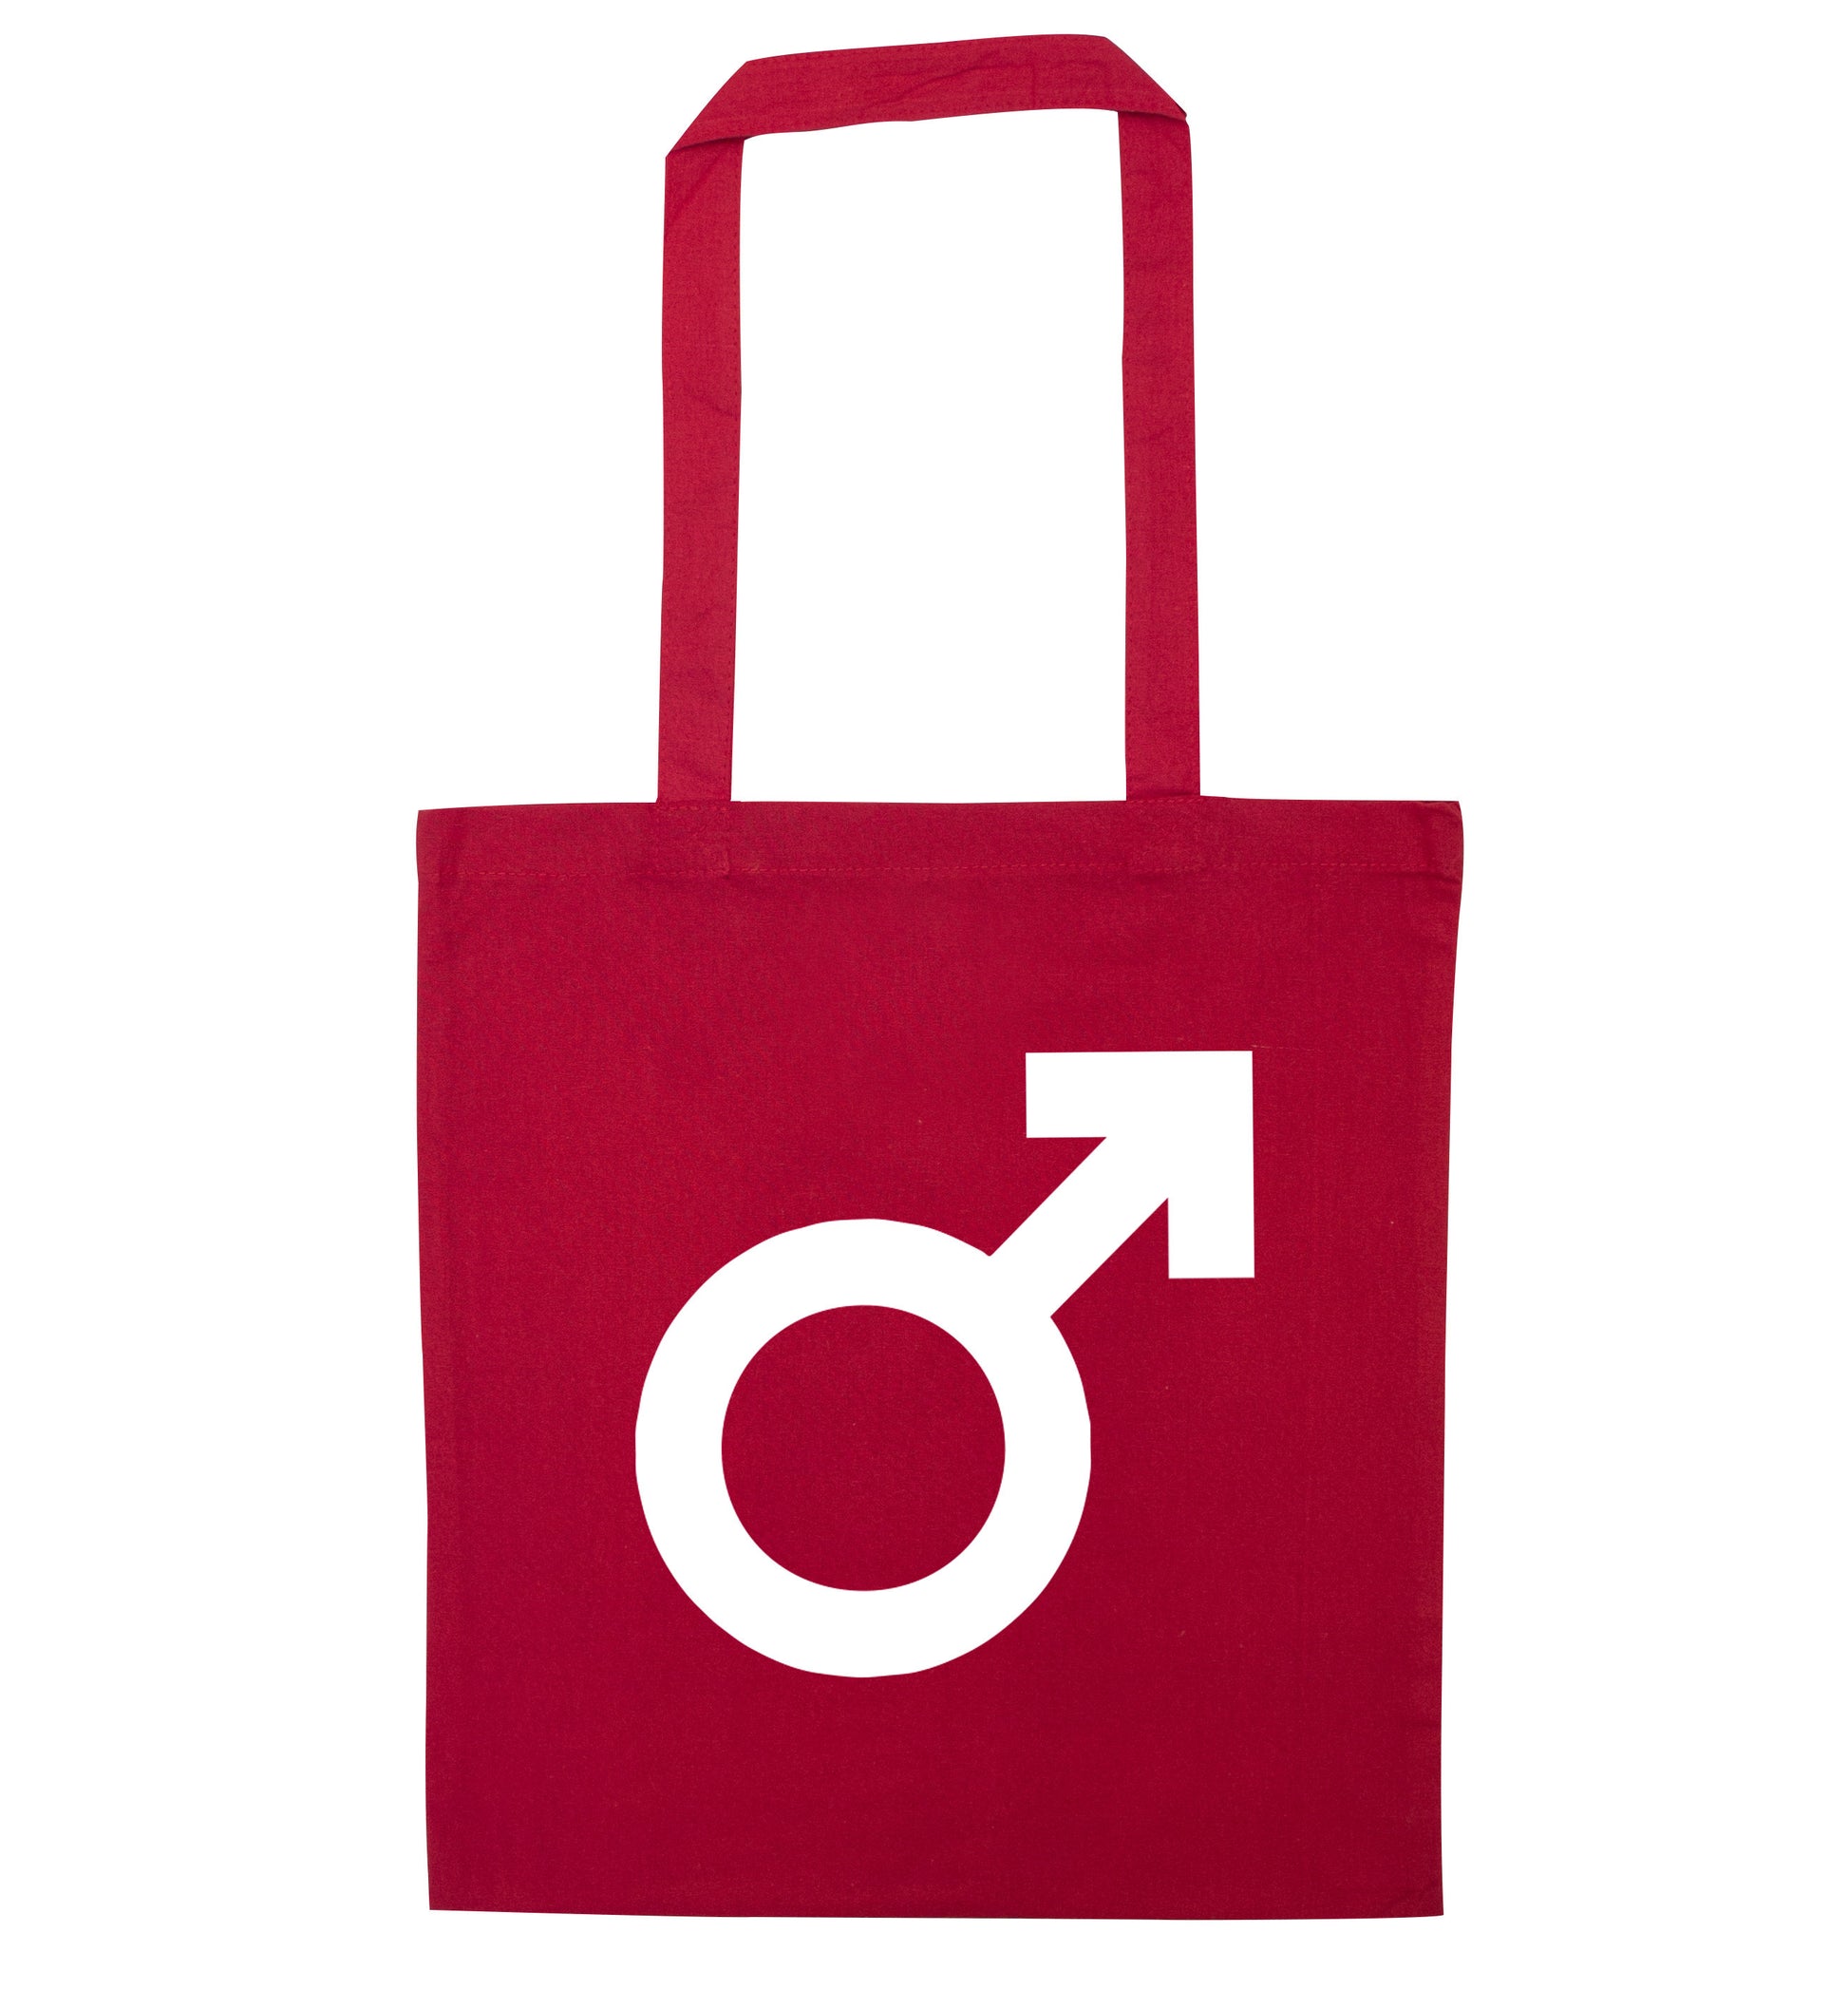 Male symbol large red tote bag